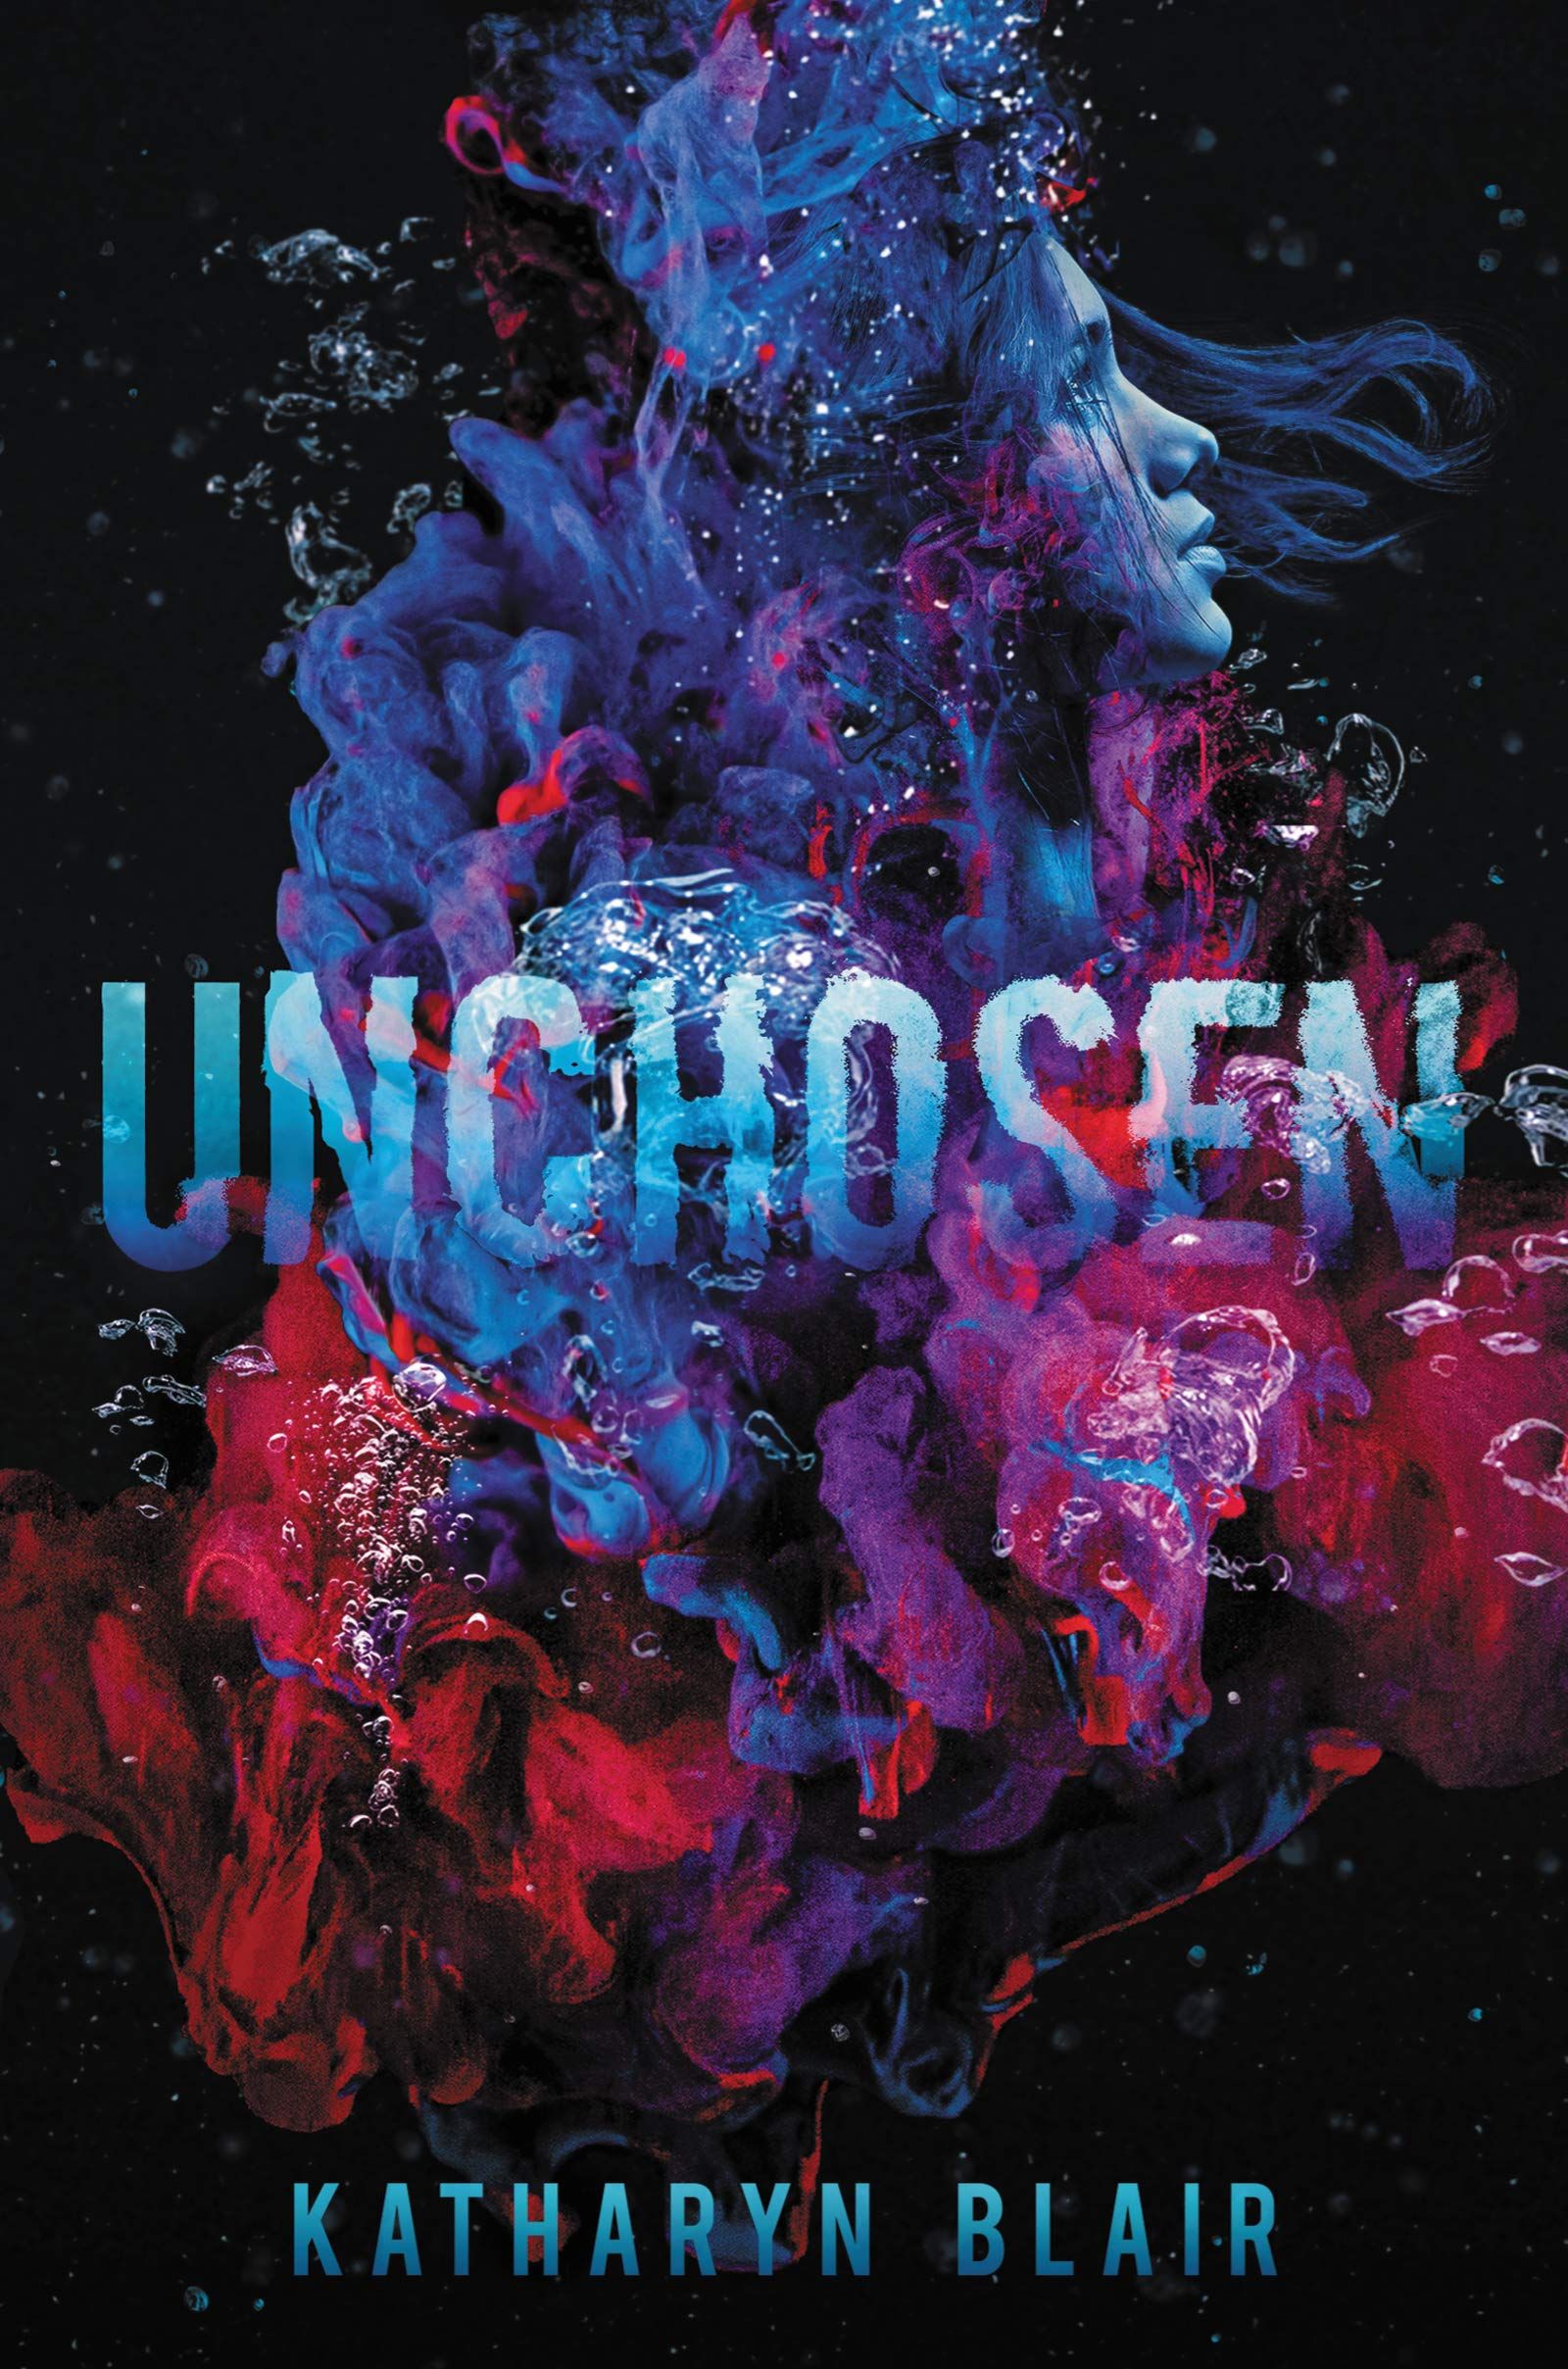 Unchosen by Katharyn Blair book cover